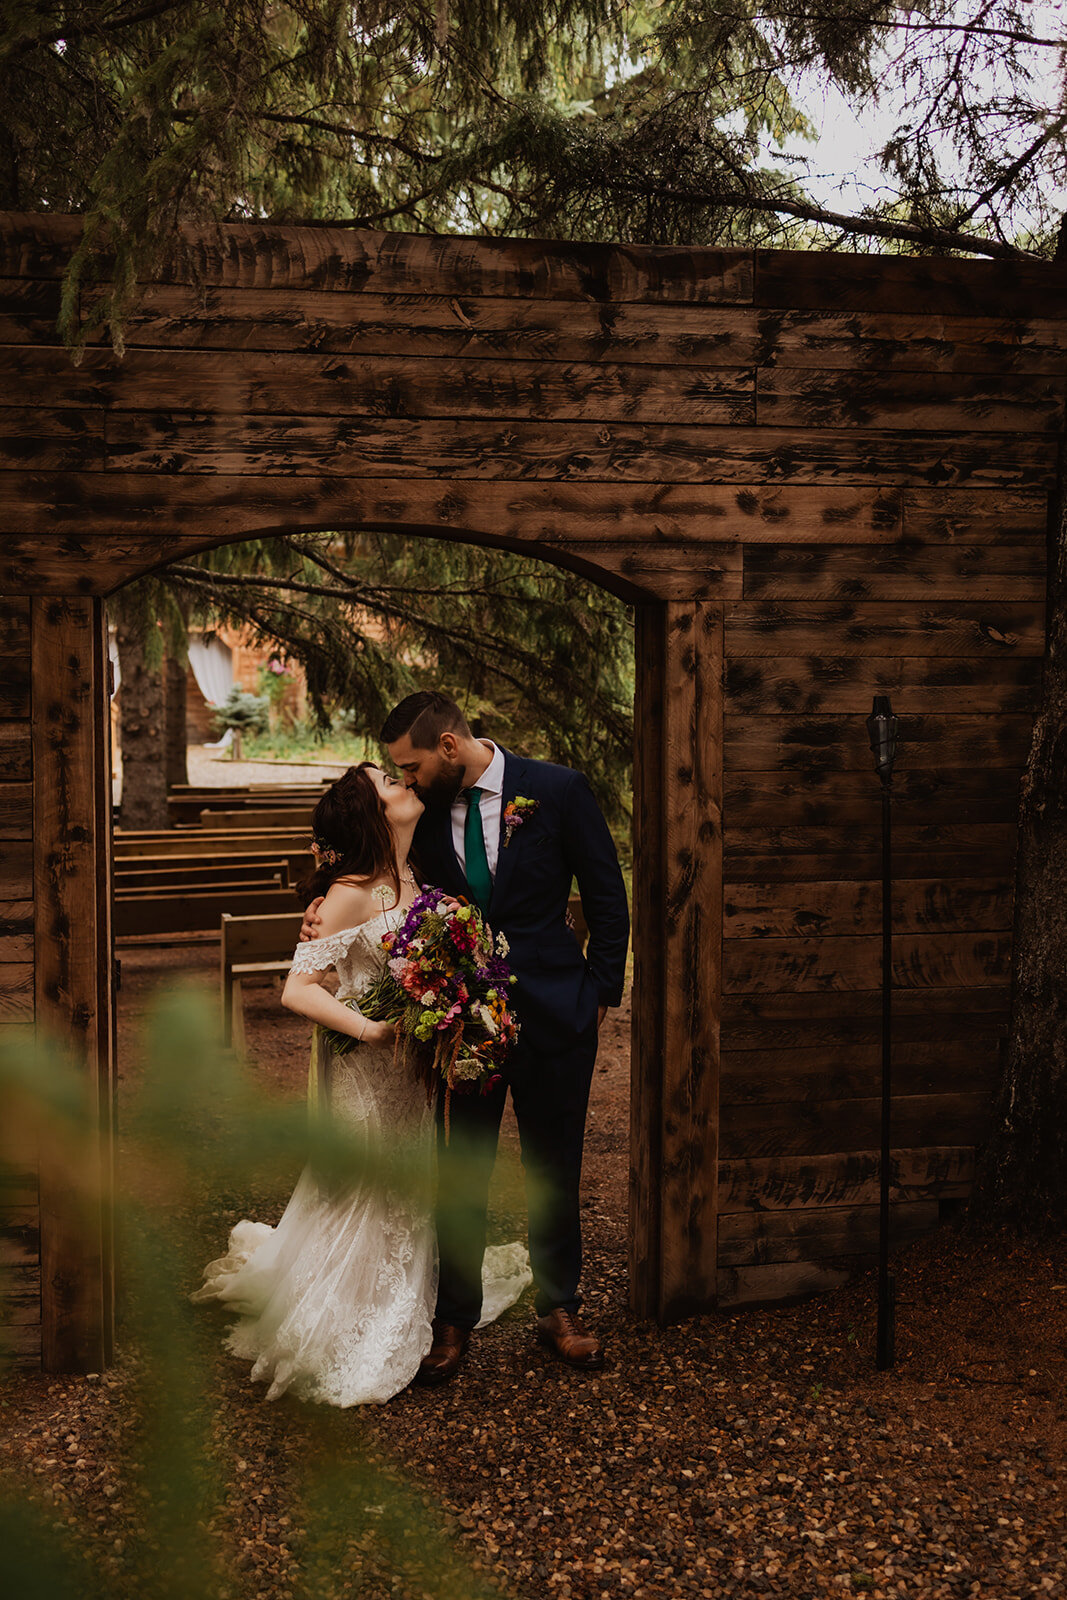 Jessica-Rae-Schulz-Edmonton-Alberta-Elopement-Wedding-Photographer-Love-Emotive-Candid-Connection-8